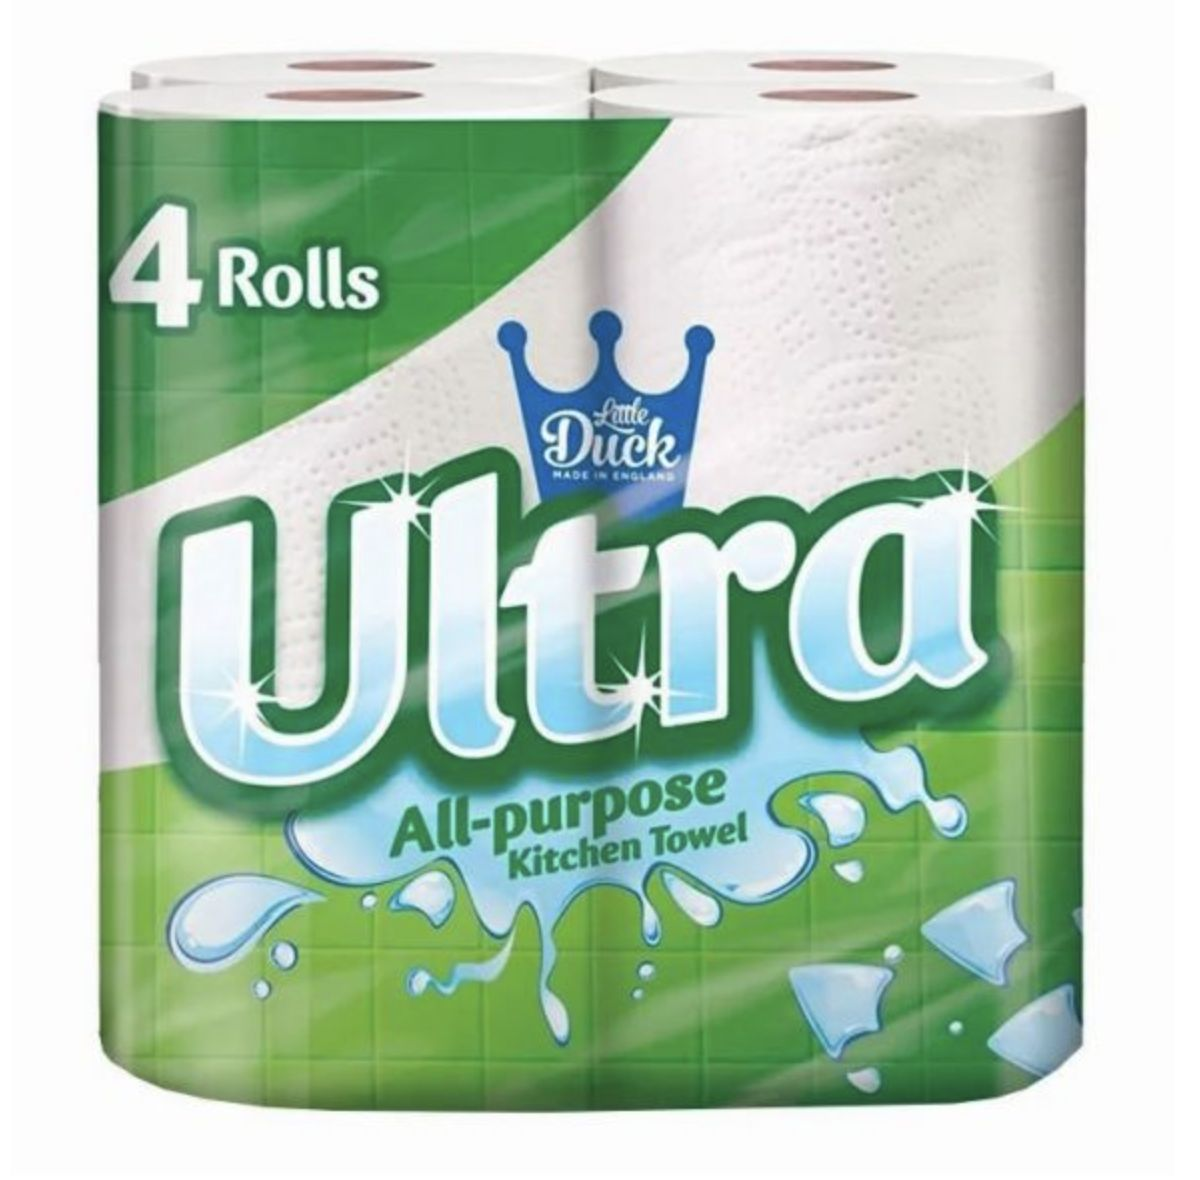 24 Rolls Ultra All Purpose Kitchen Towel 2 Ply